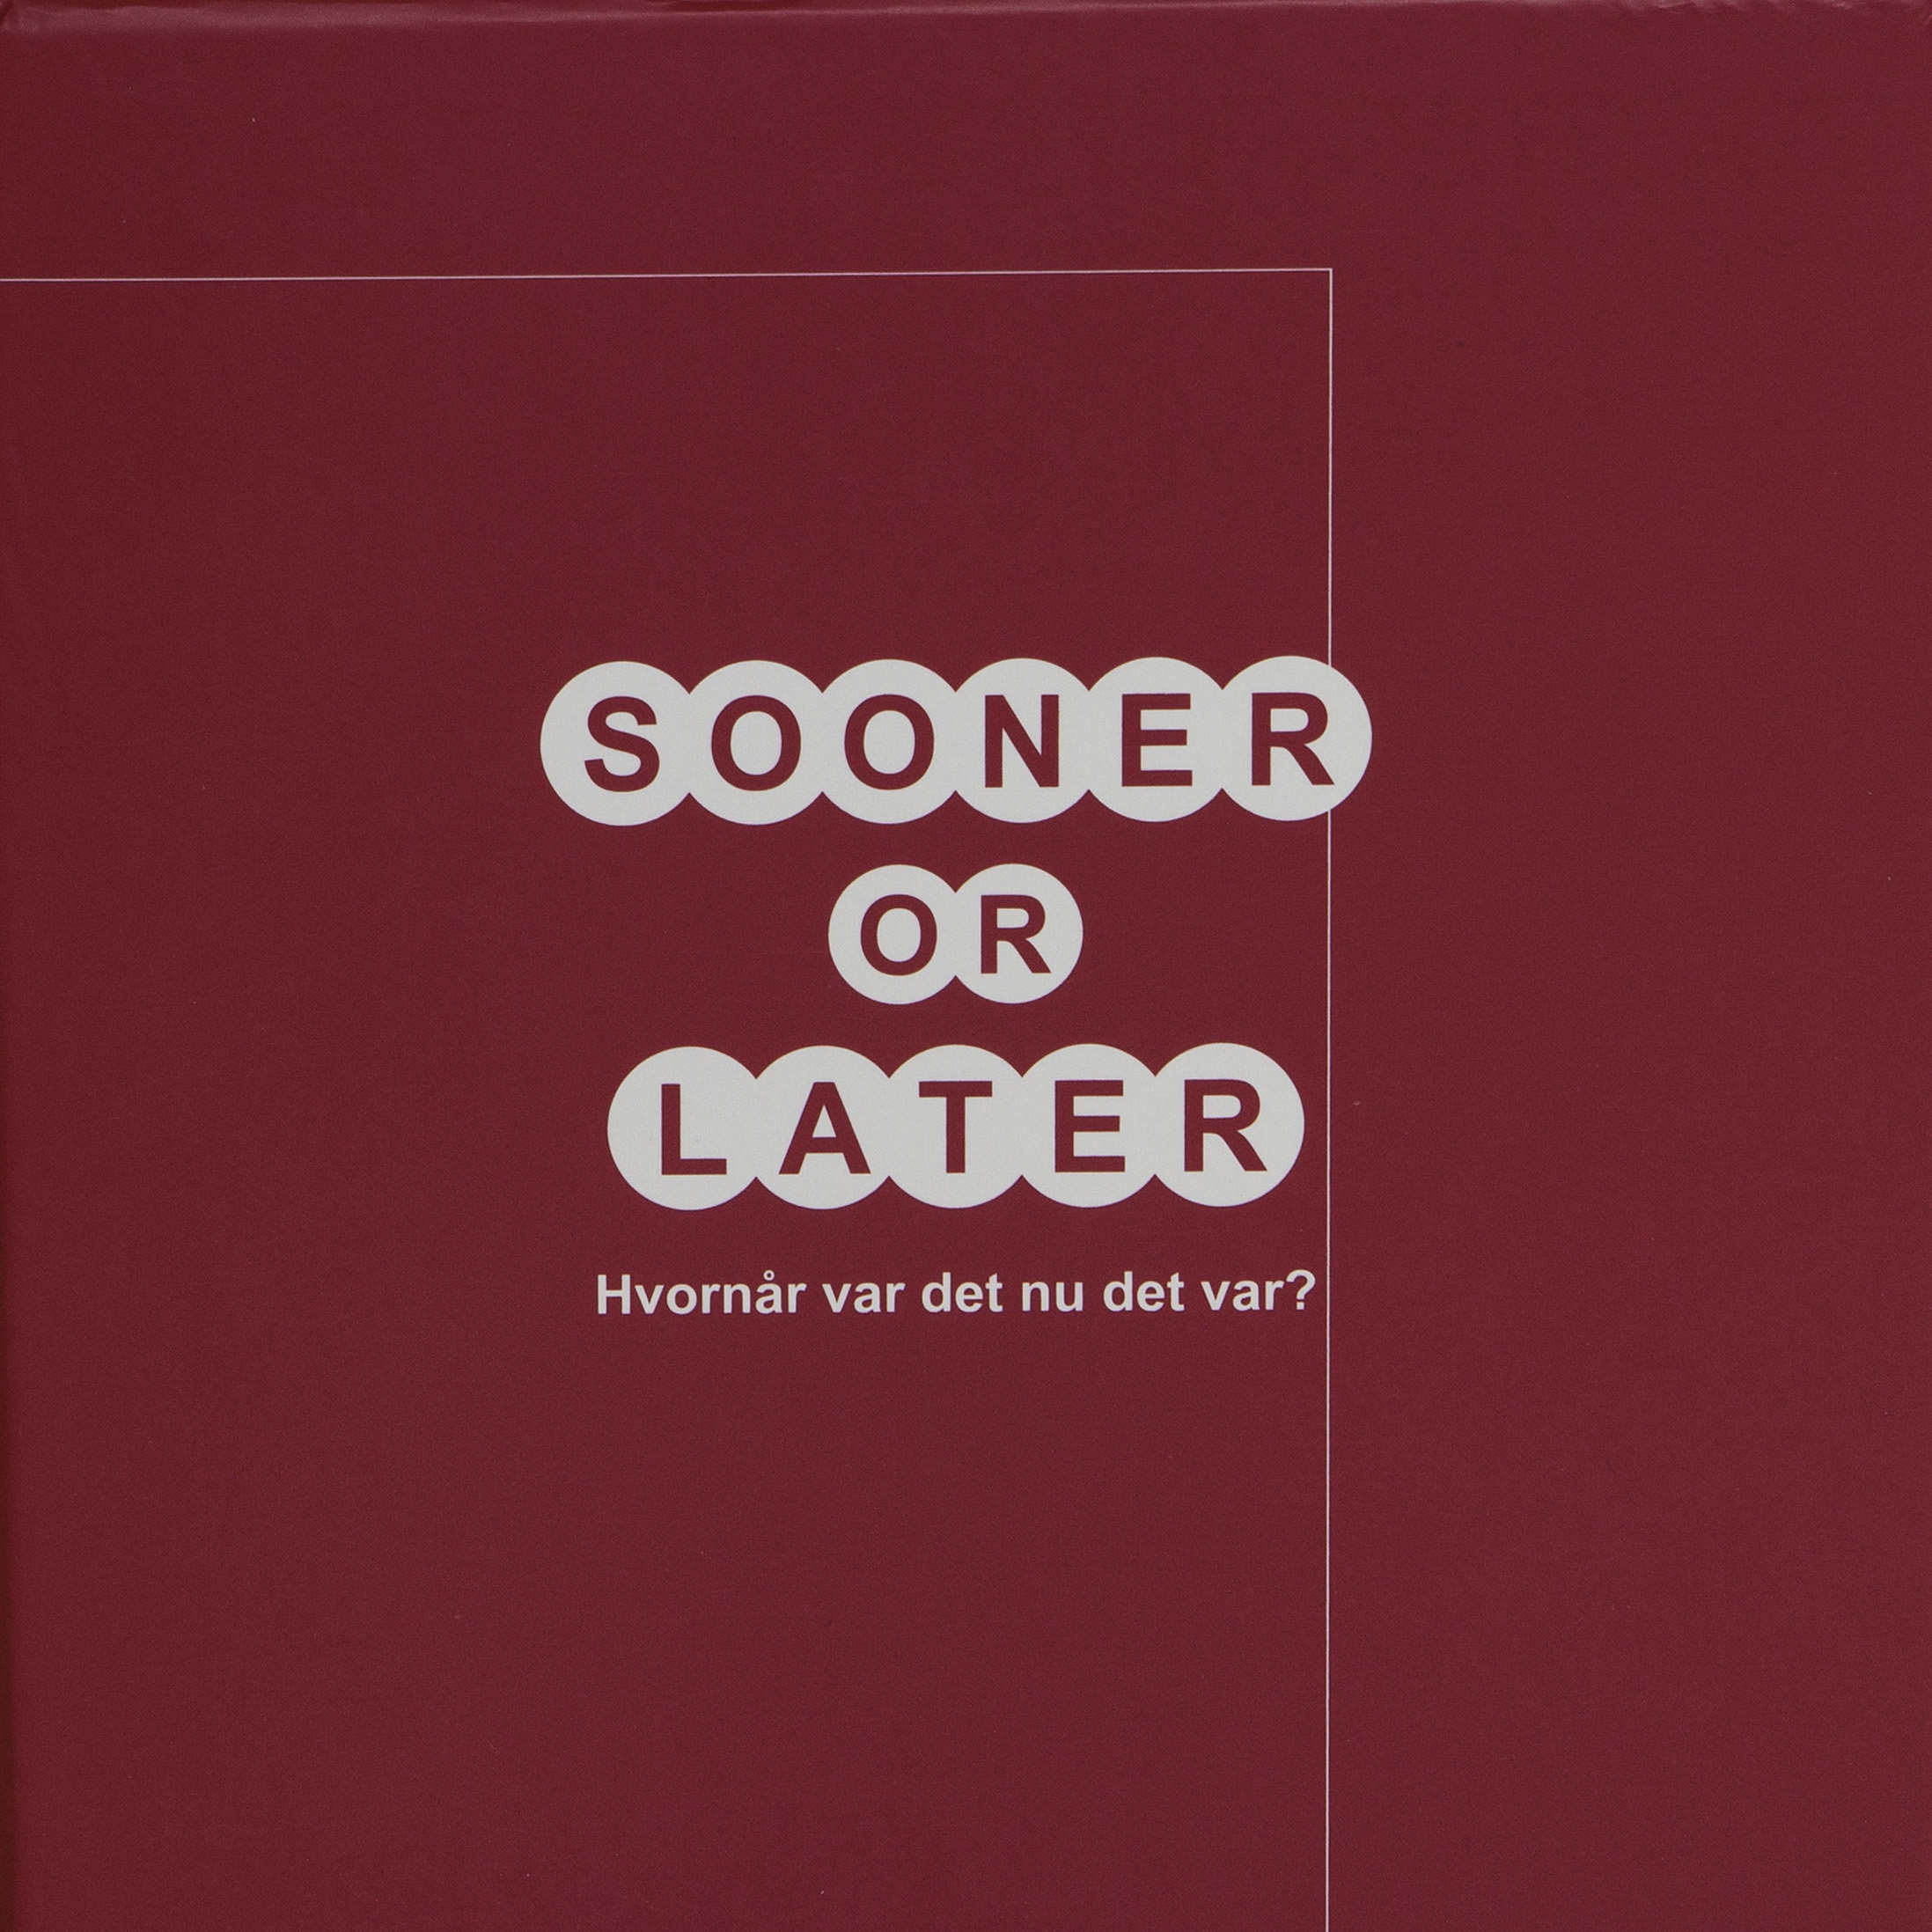 Sooner or later